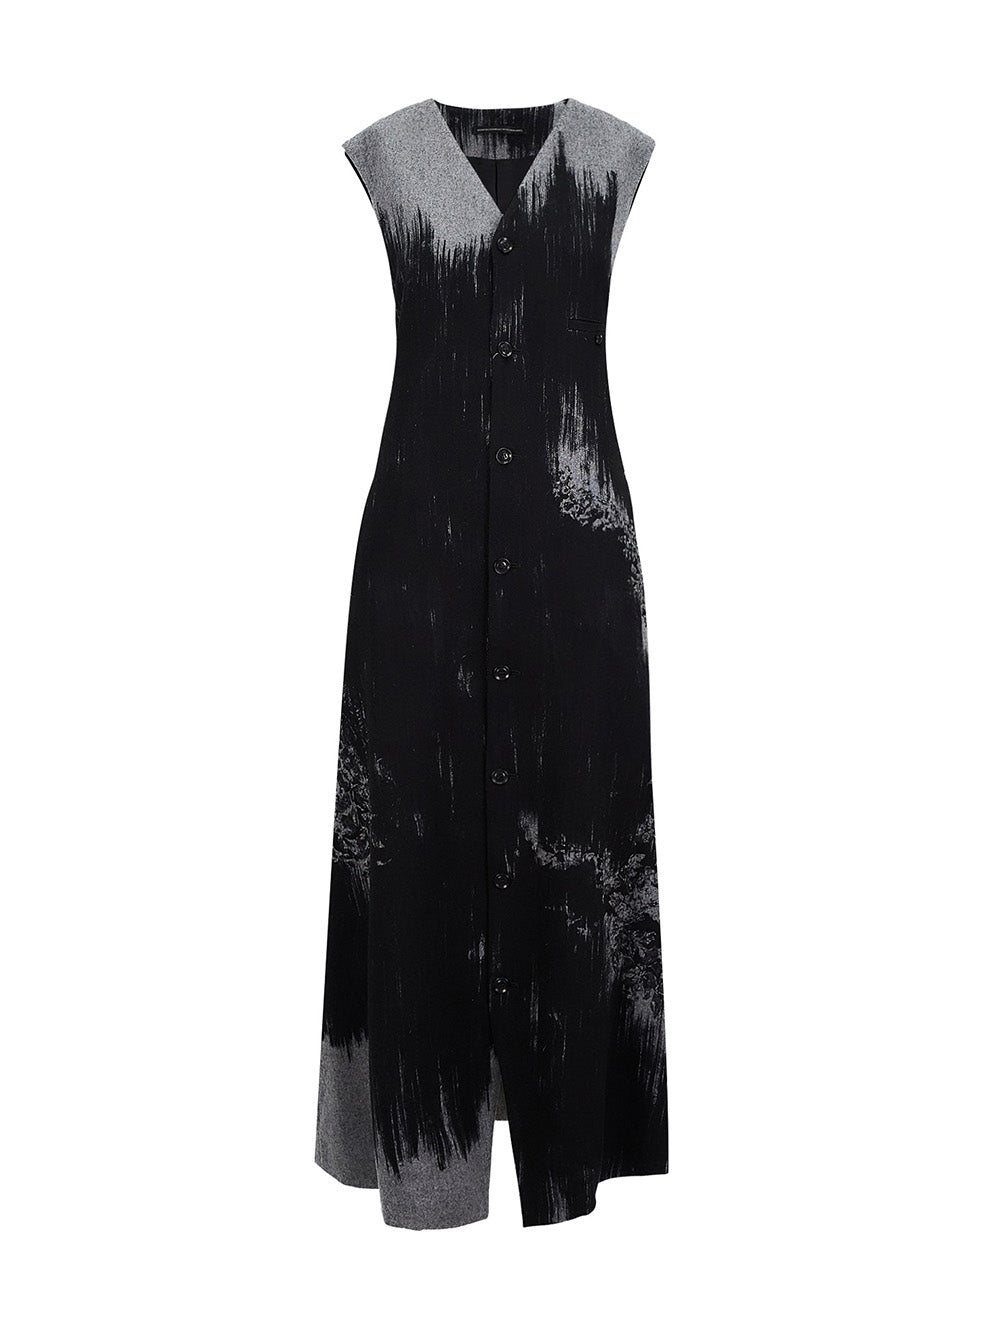 Ys-1-14-Flannel-Flower-Print-Long-Sleeveless-Dress-Dark-Gray-1